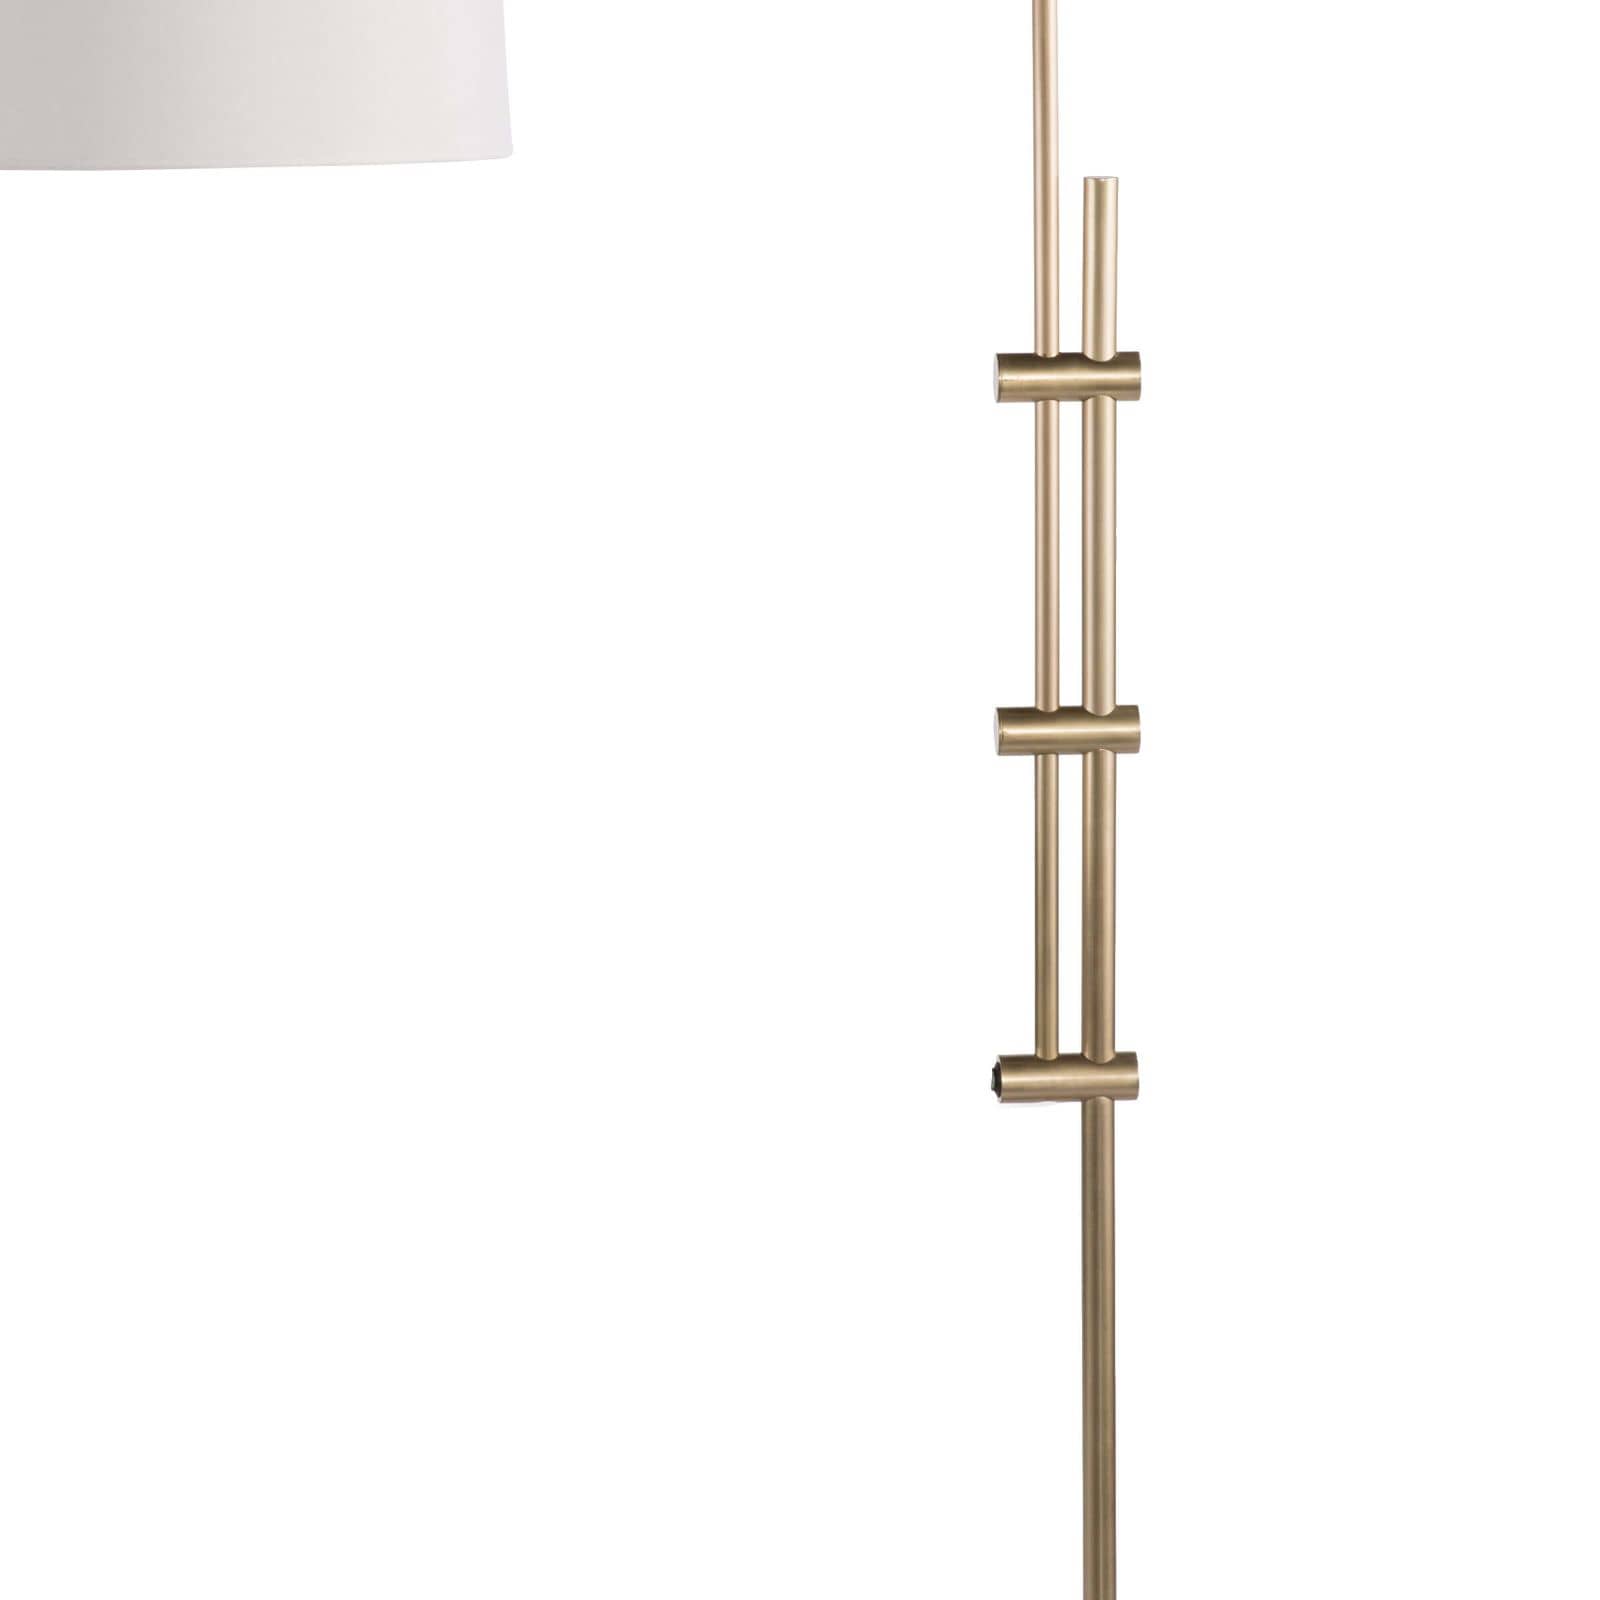 Regina Andrew Arc Floor Lamp With Fabric Shade (Natural Brass)